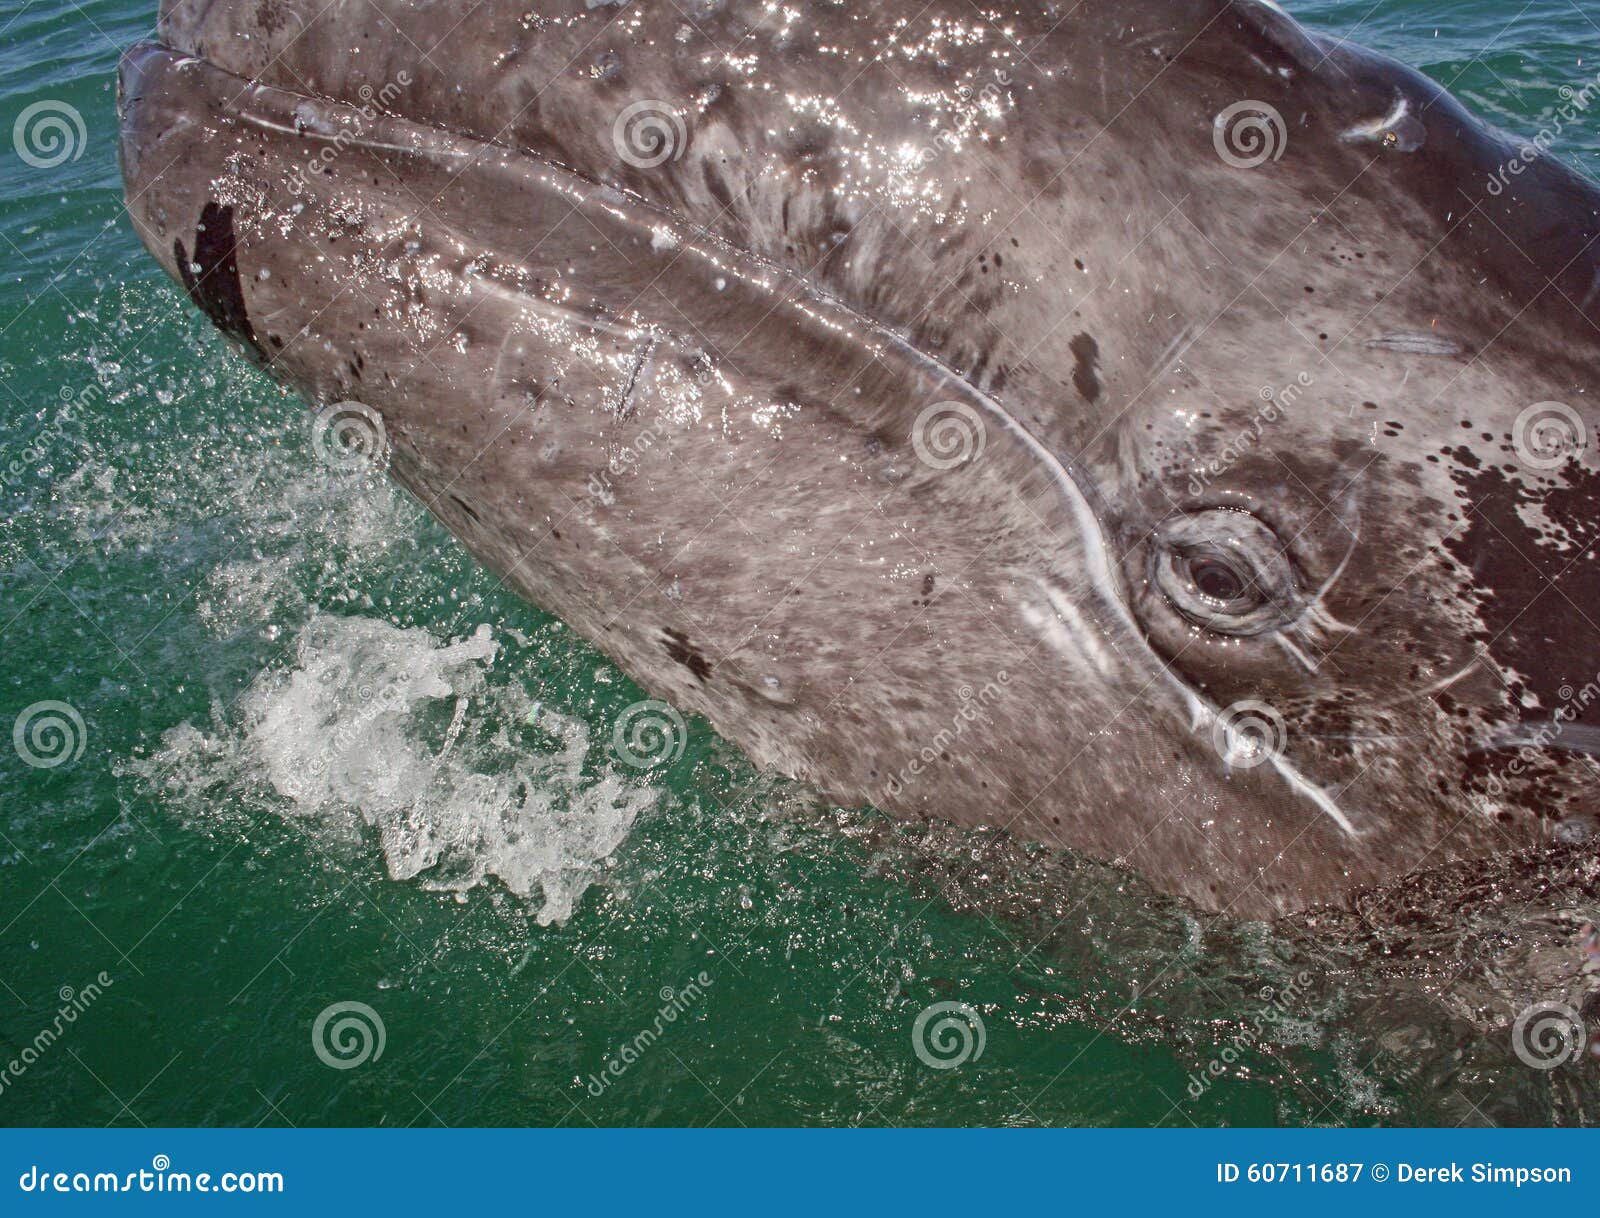 gray whale calf investigating a small boat